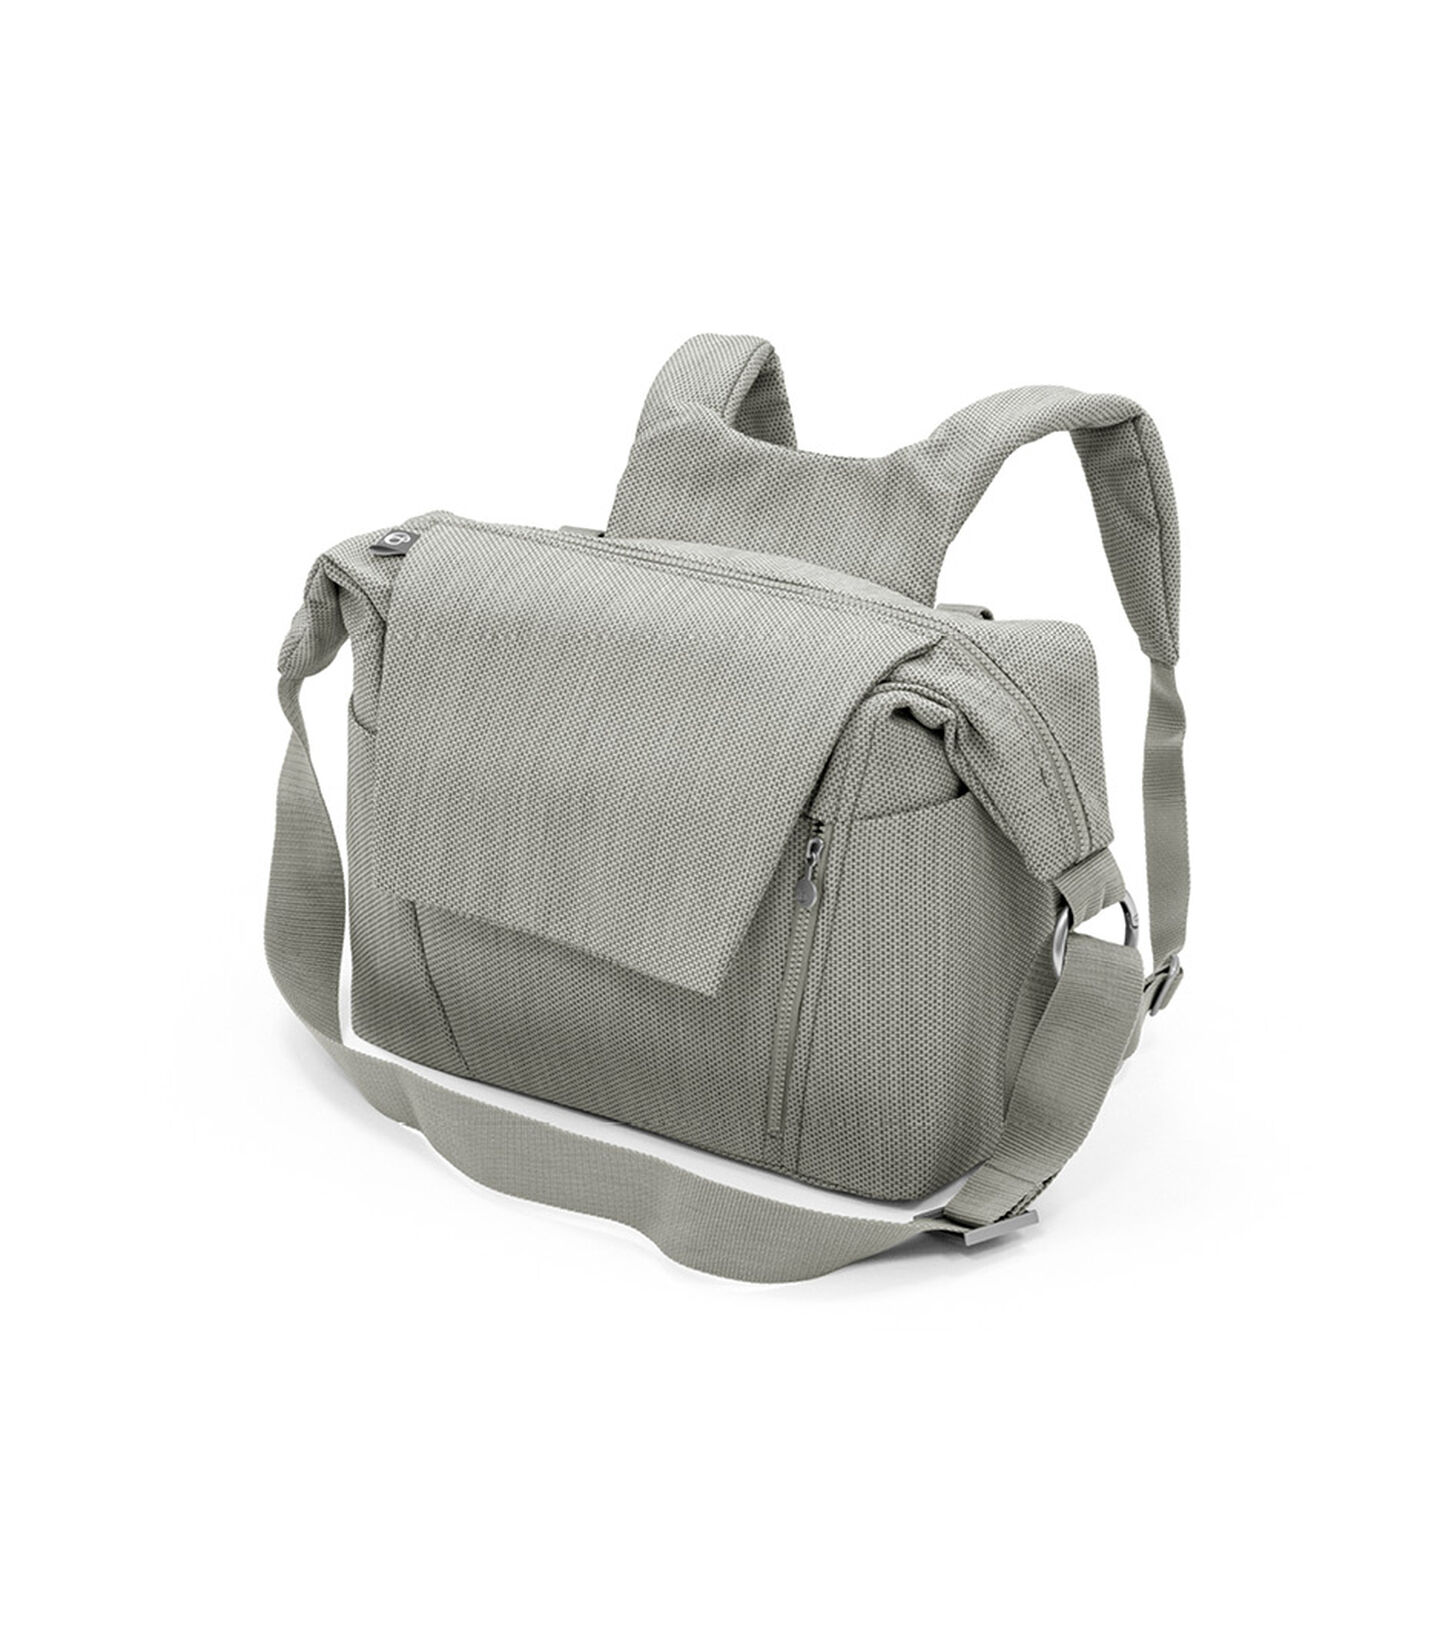 Stokke® Changing bag Brushed Grey, ブラシュグレイ, mainview view 1